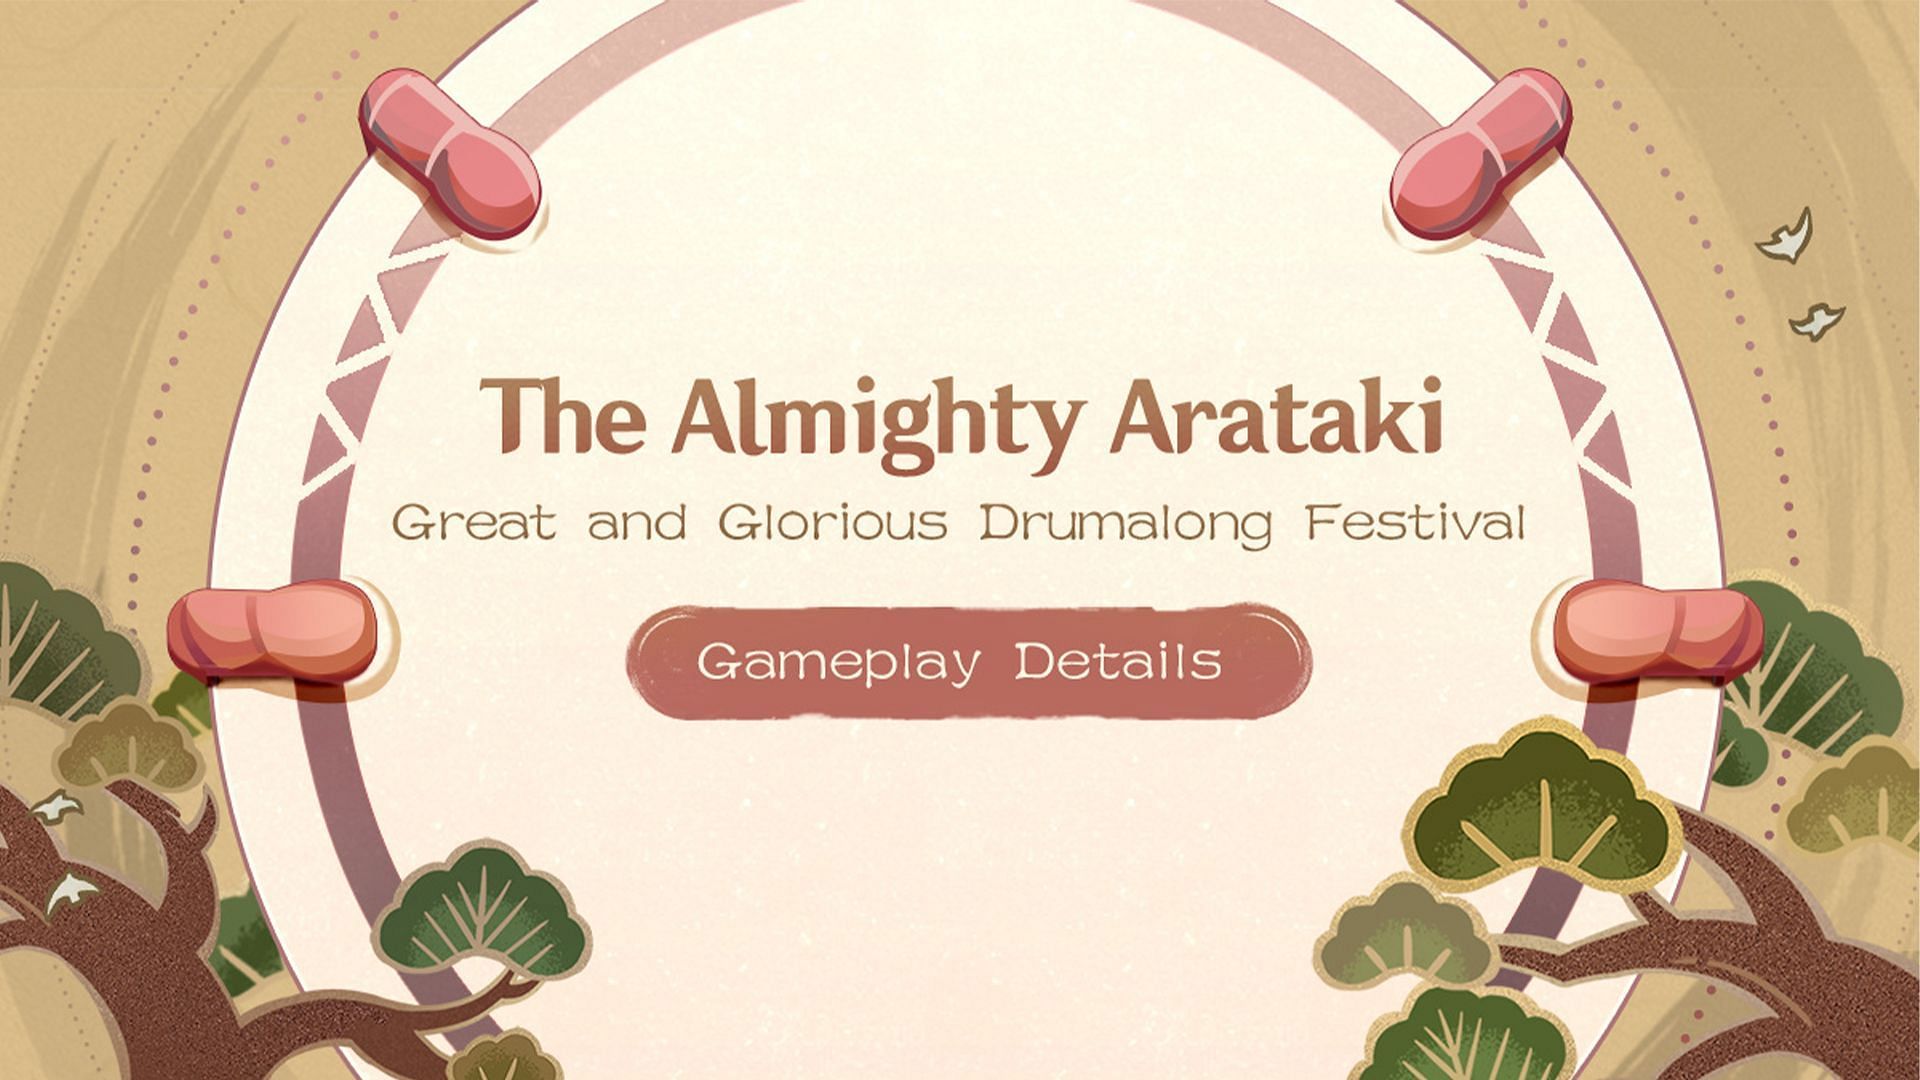 The Almighty Arataki Great and Glorious Drumalong Festival (Image via HoYoverse)